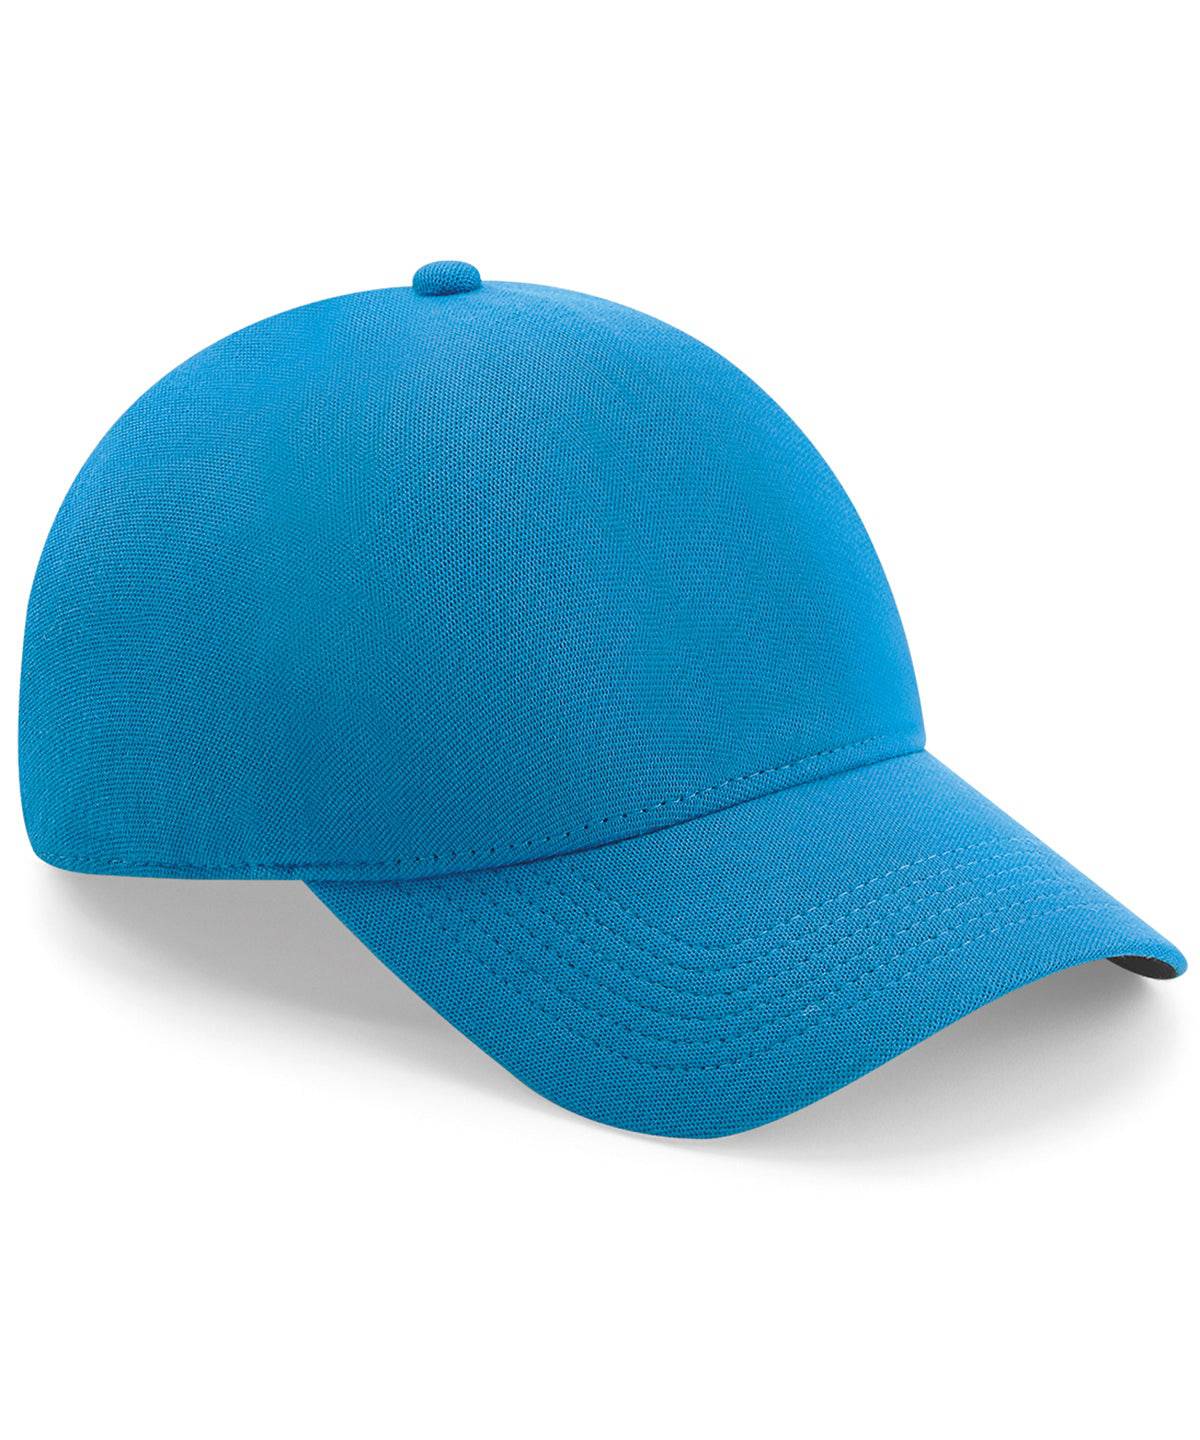 Sapphire Blue - Seamless waterproof cap